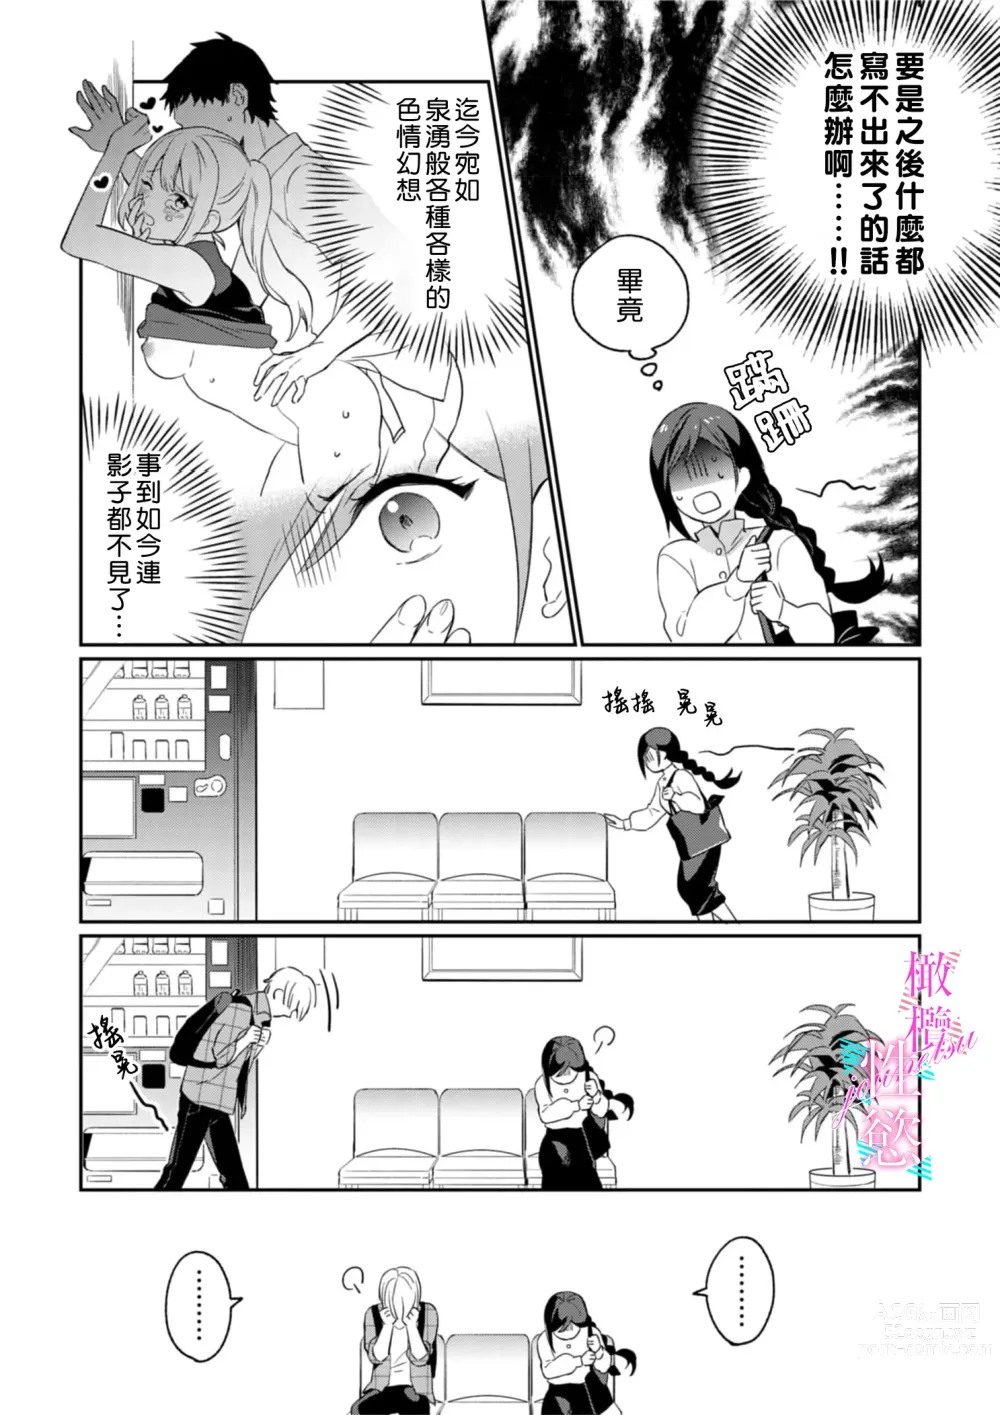 Page 6 of manga 写作热情读作情欲 1-11